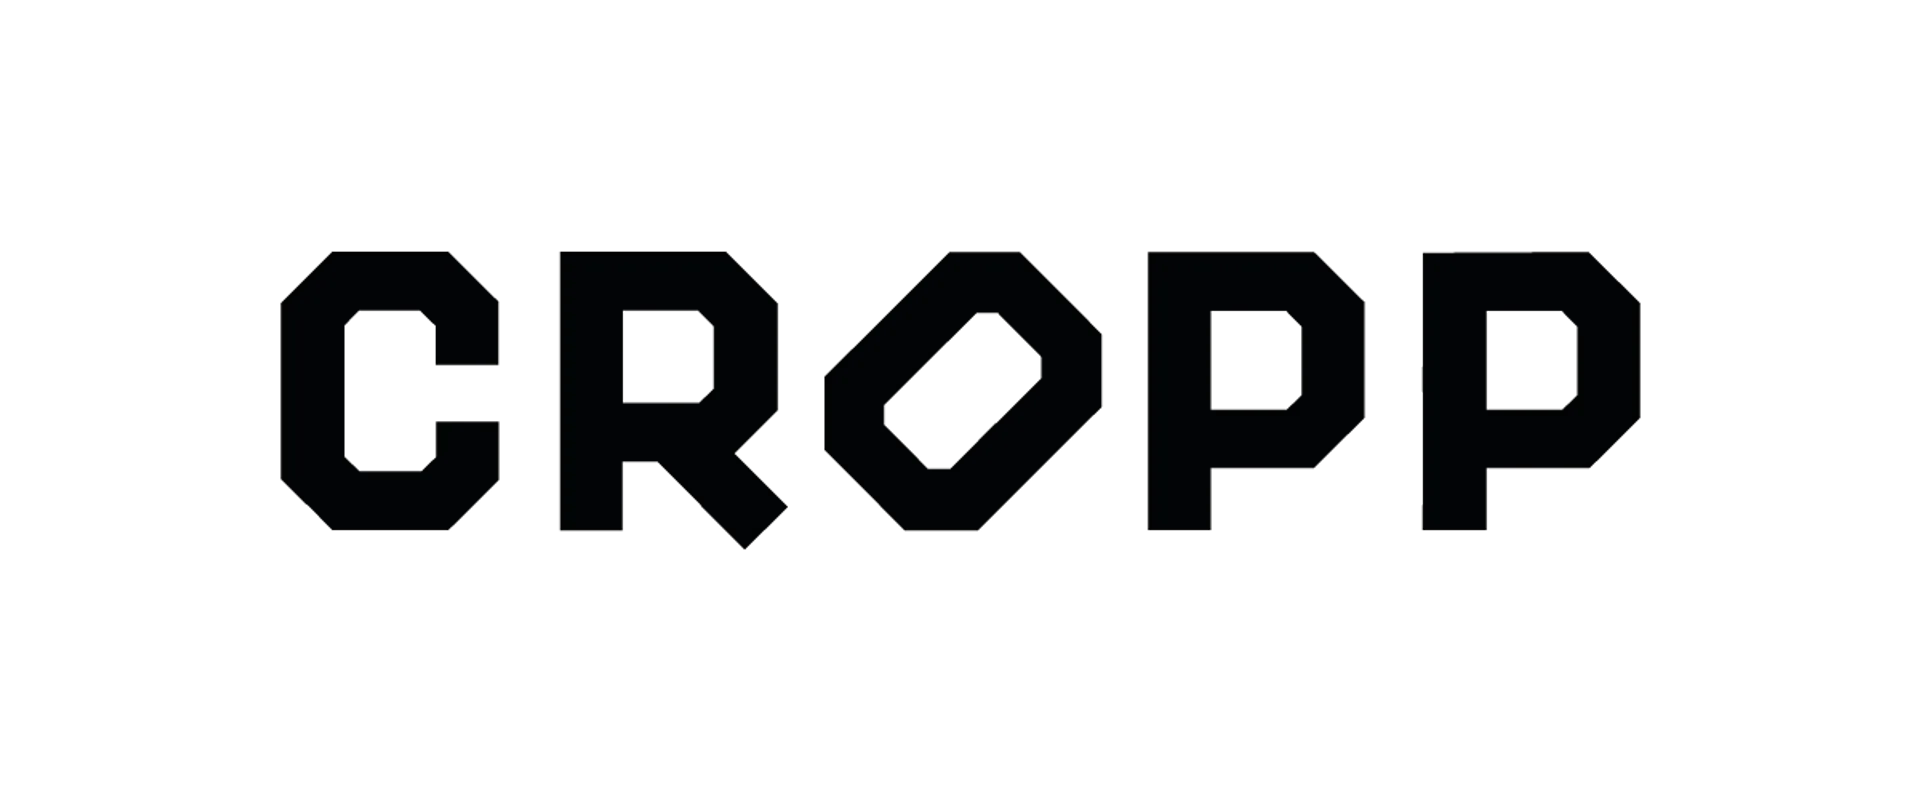 CROPP logo